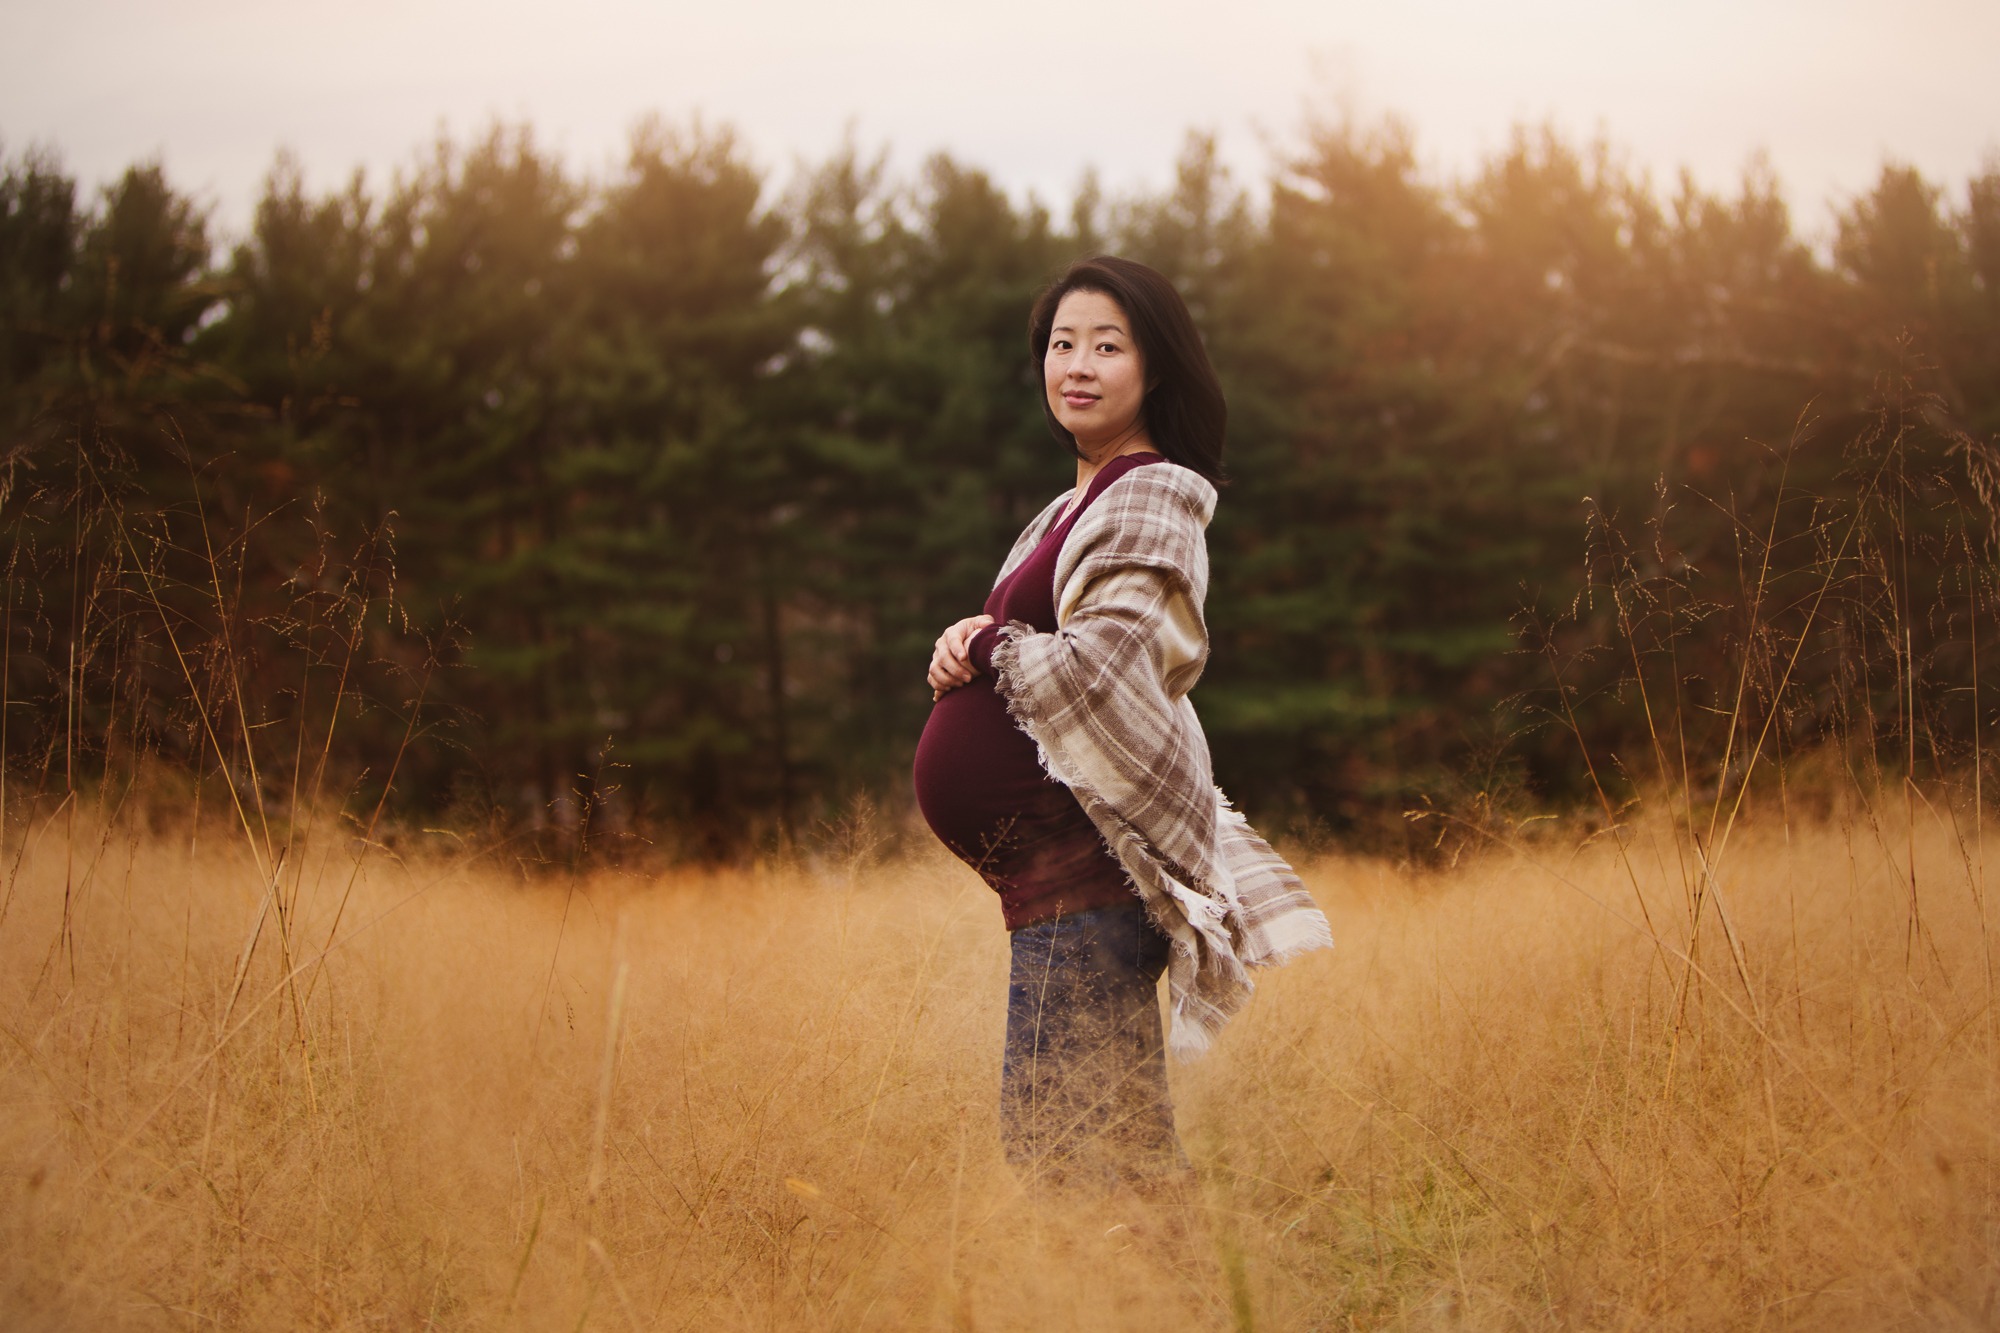 Tips for Maternity Photos — Bay Area Family Photographer